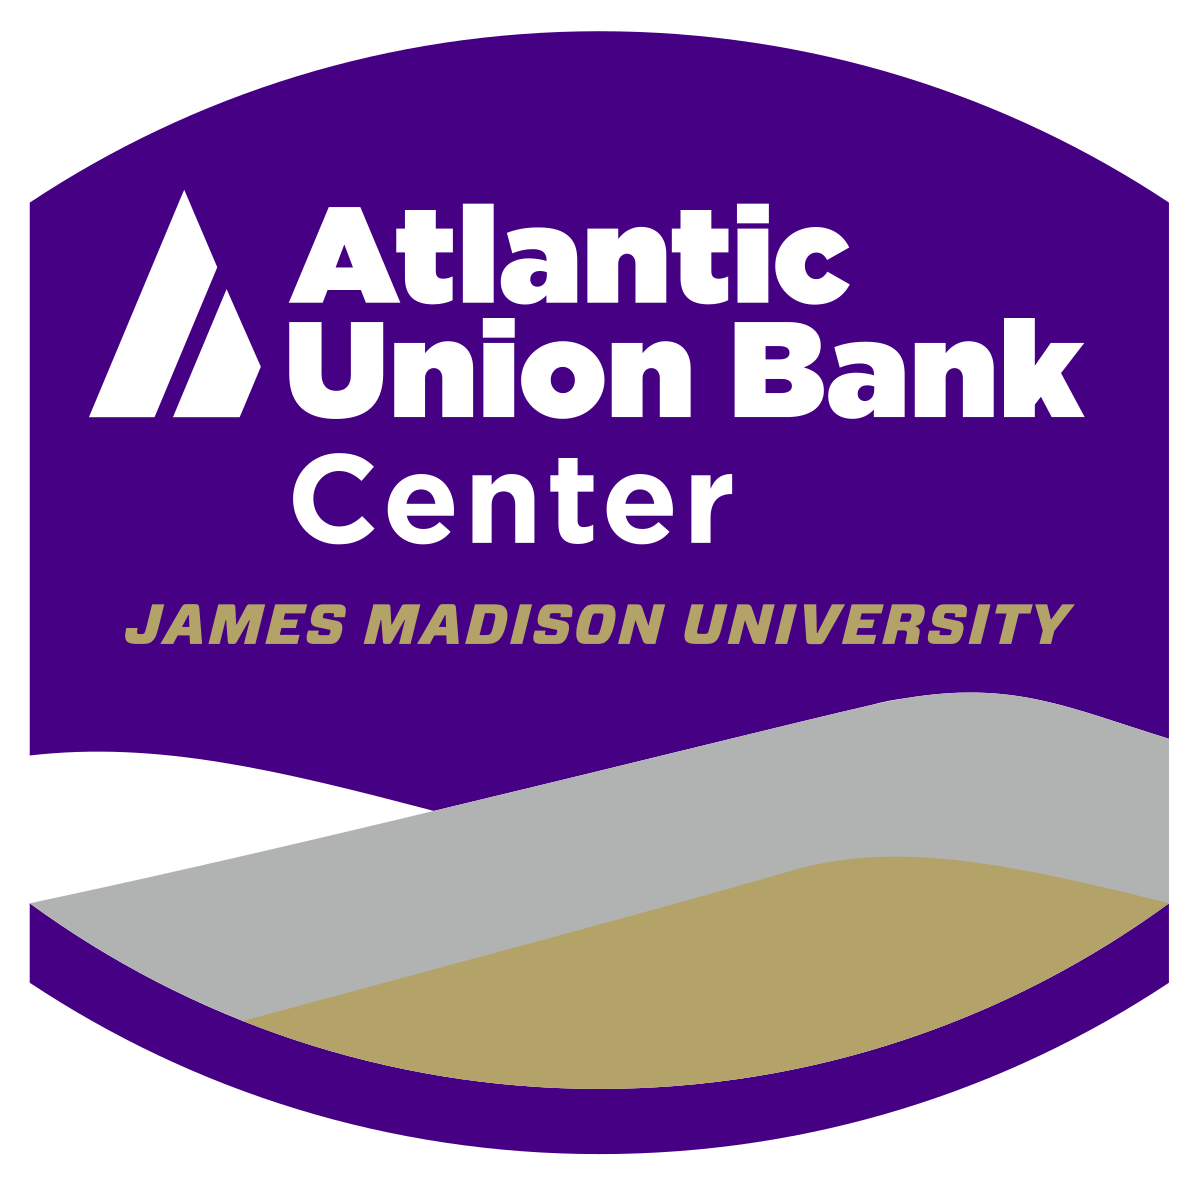 Union Bank Logo - Atlantic Union Bank Center logo